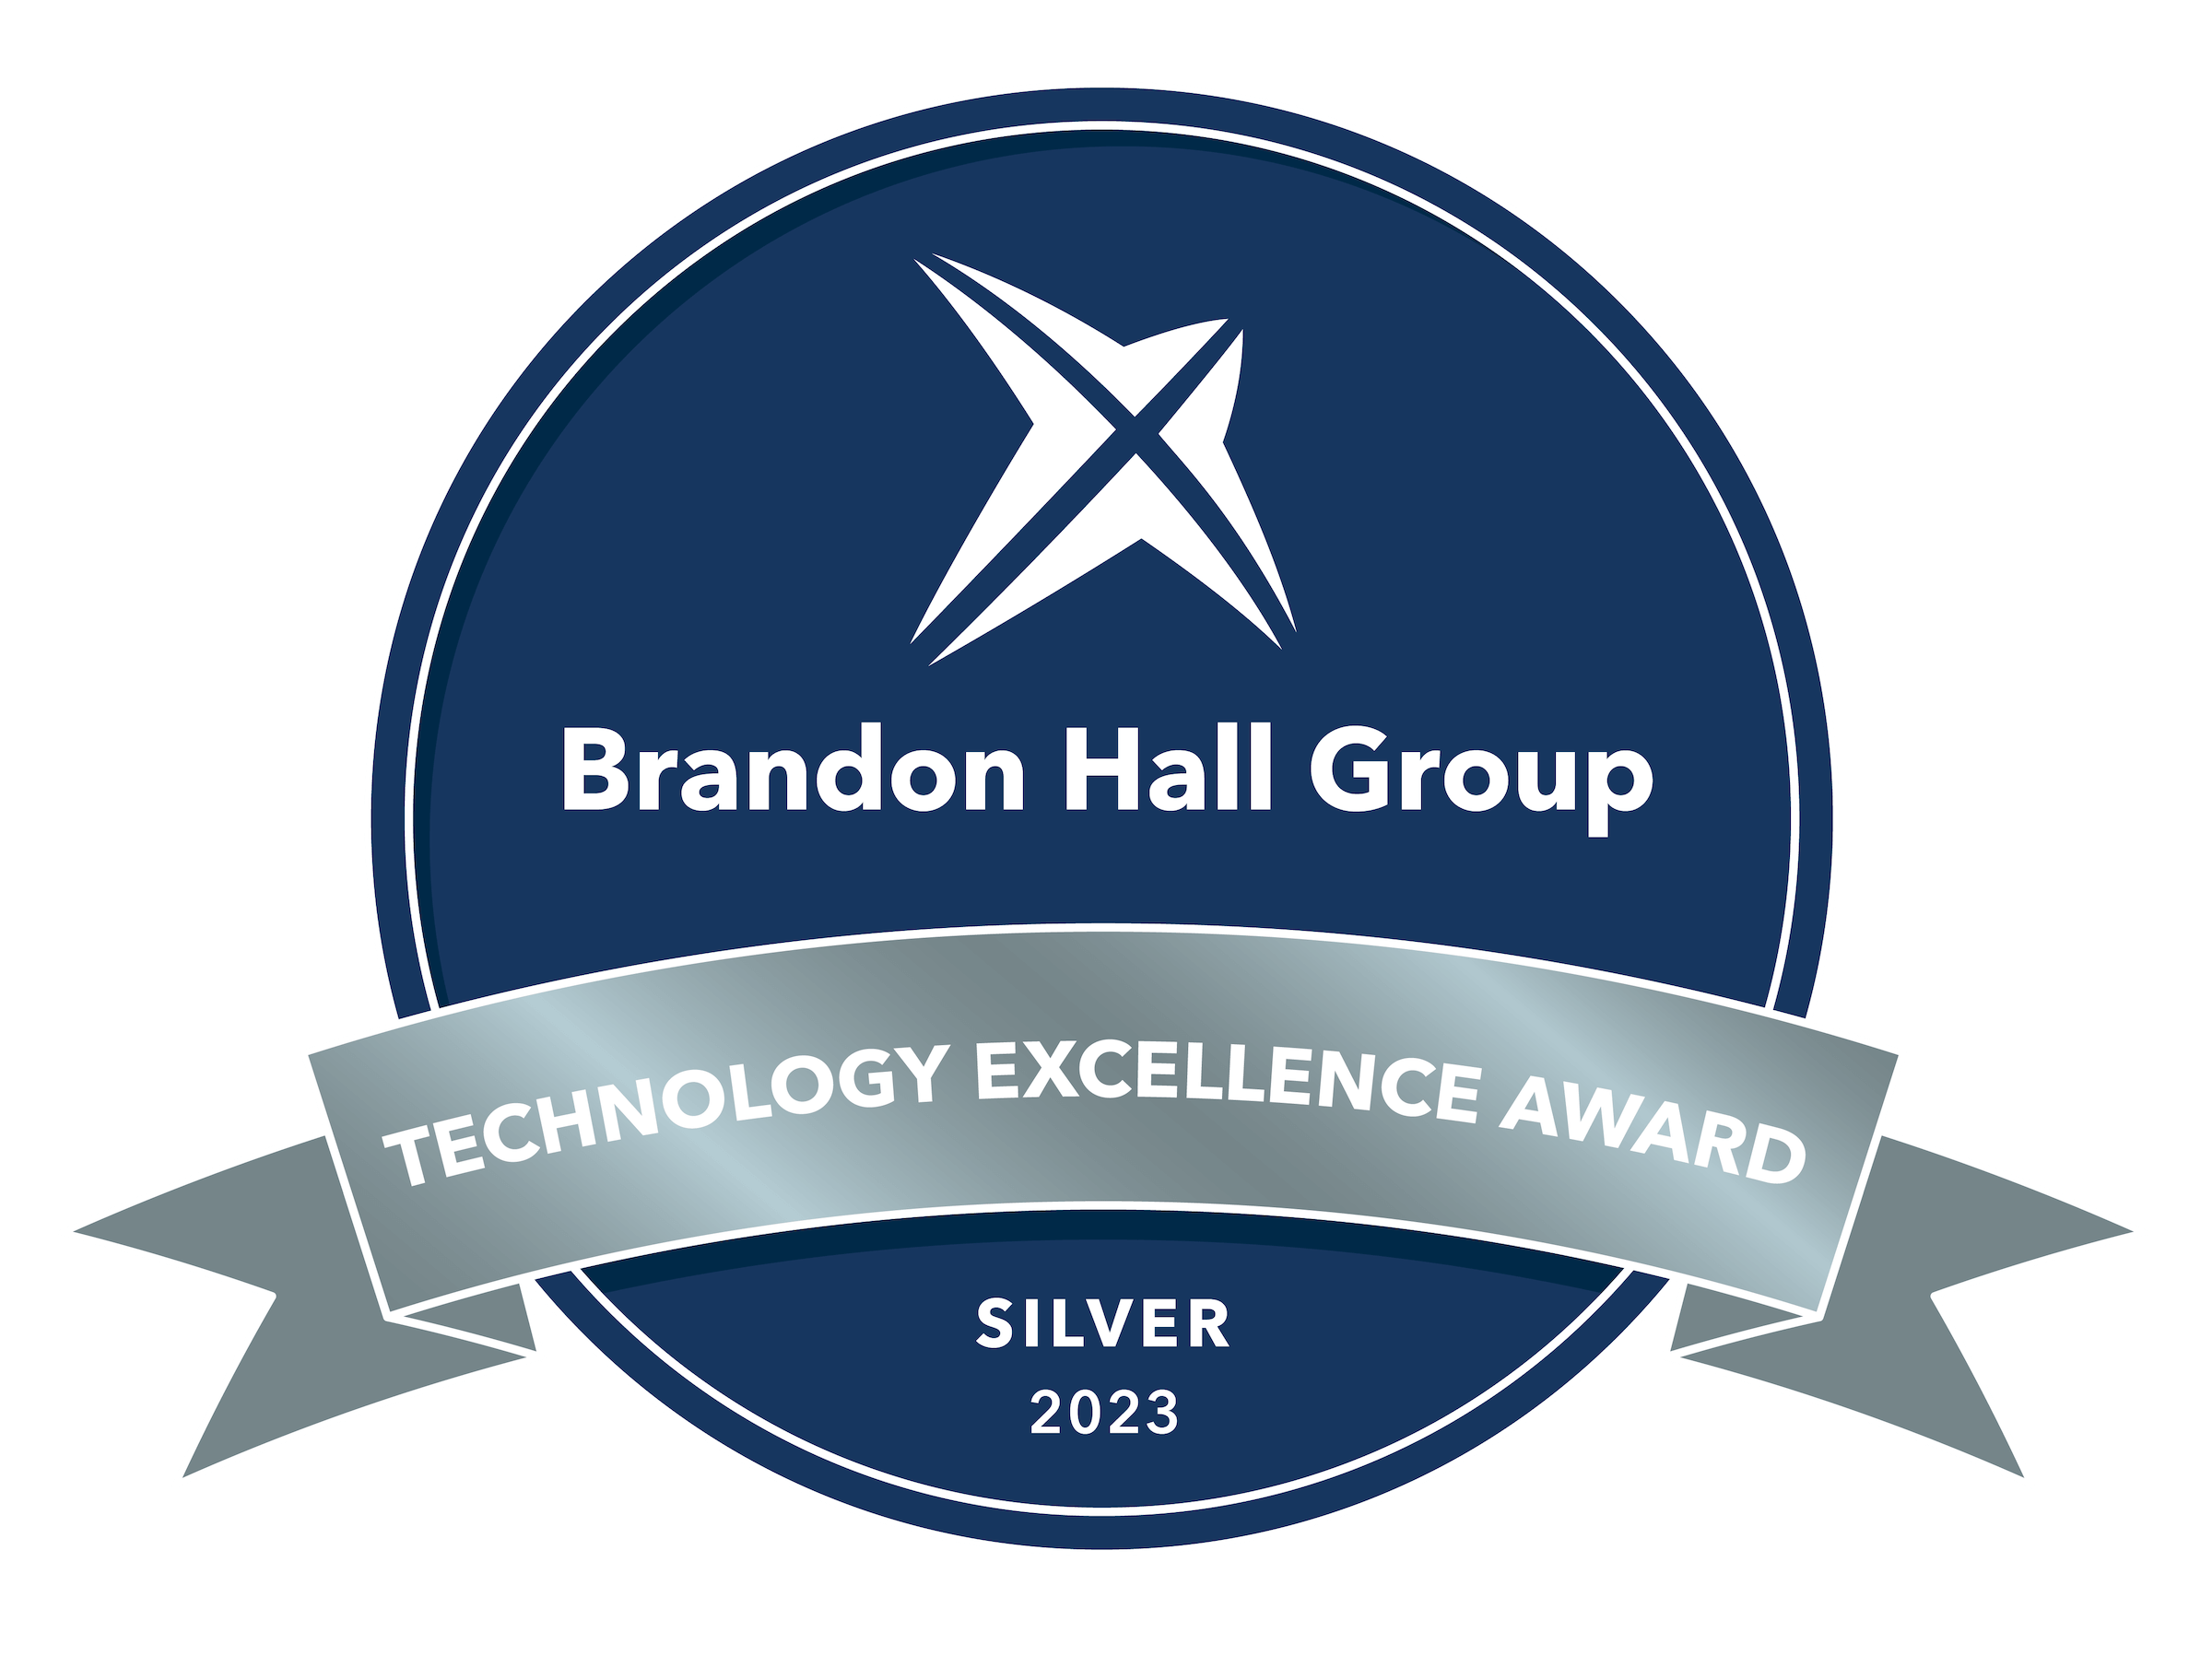 brandon hall group technology excellence award silver 2023